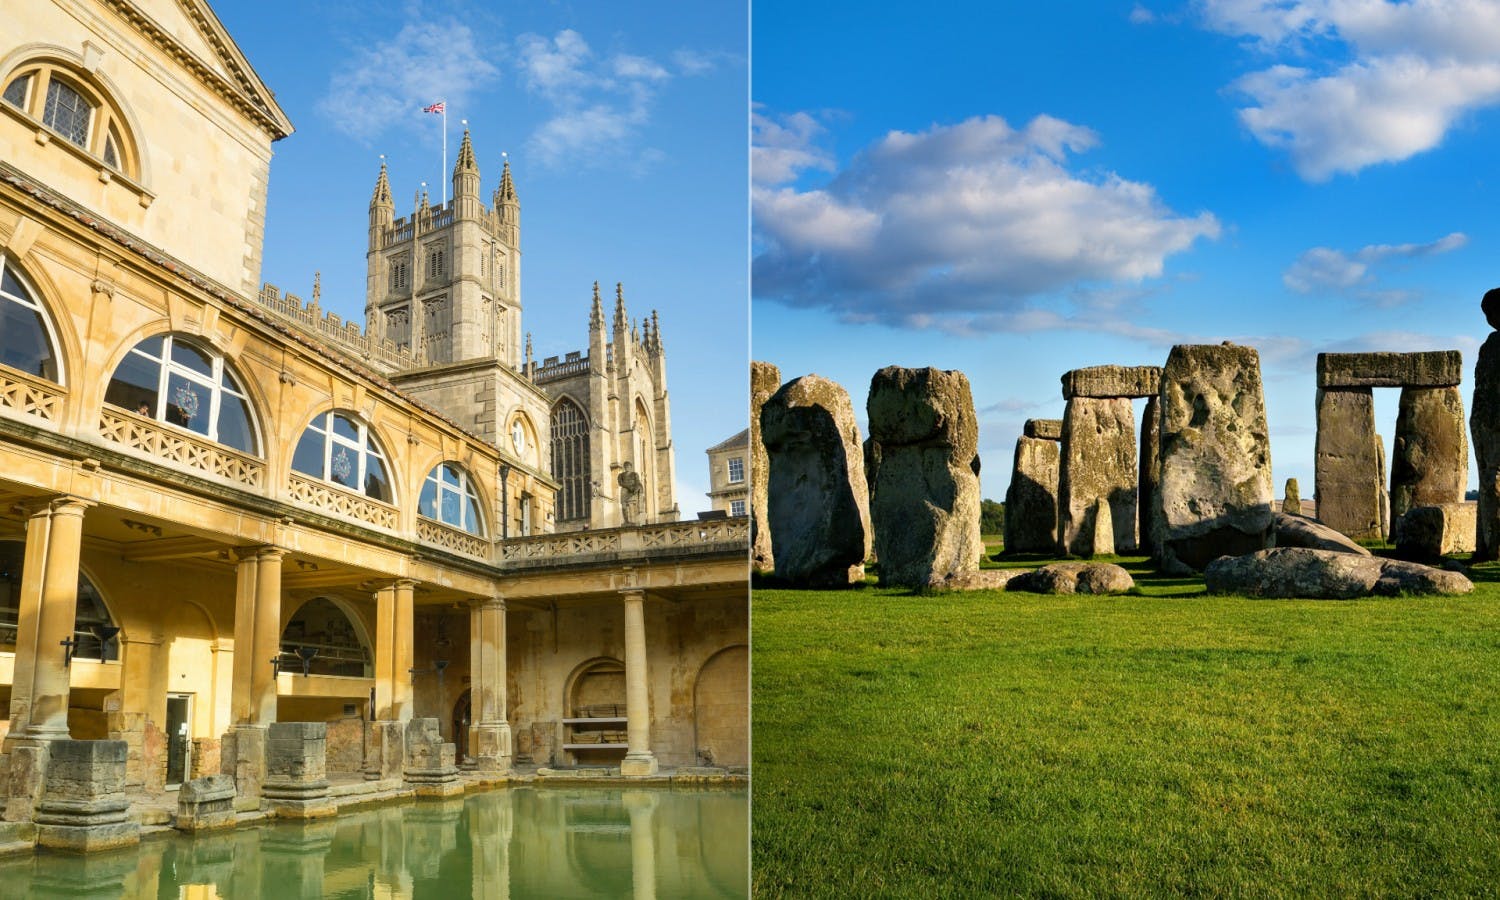 Stonehenge and Bath full-day tour